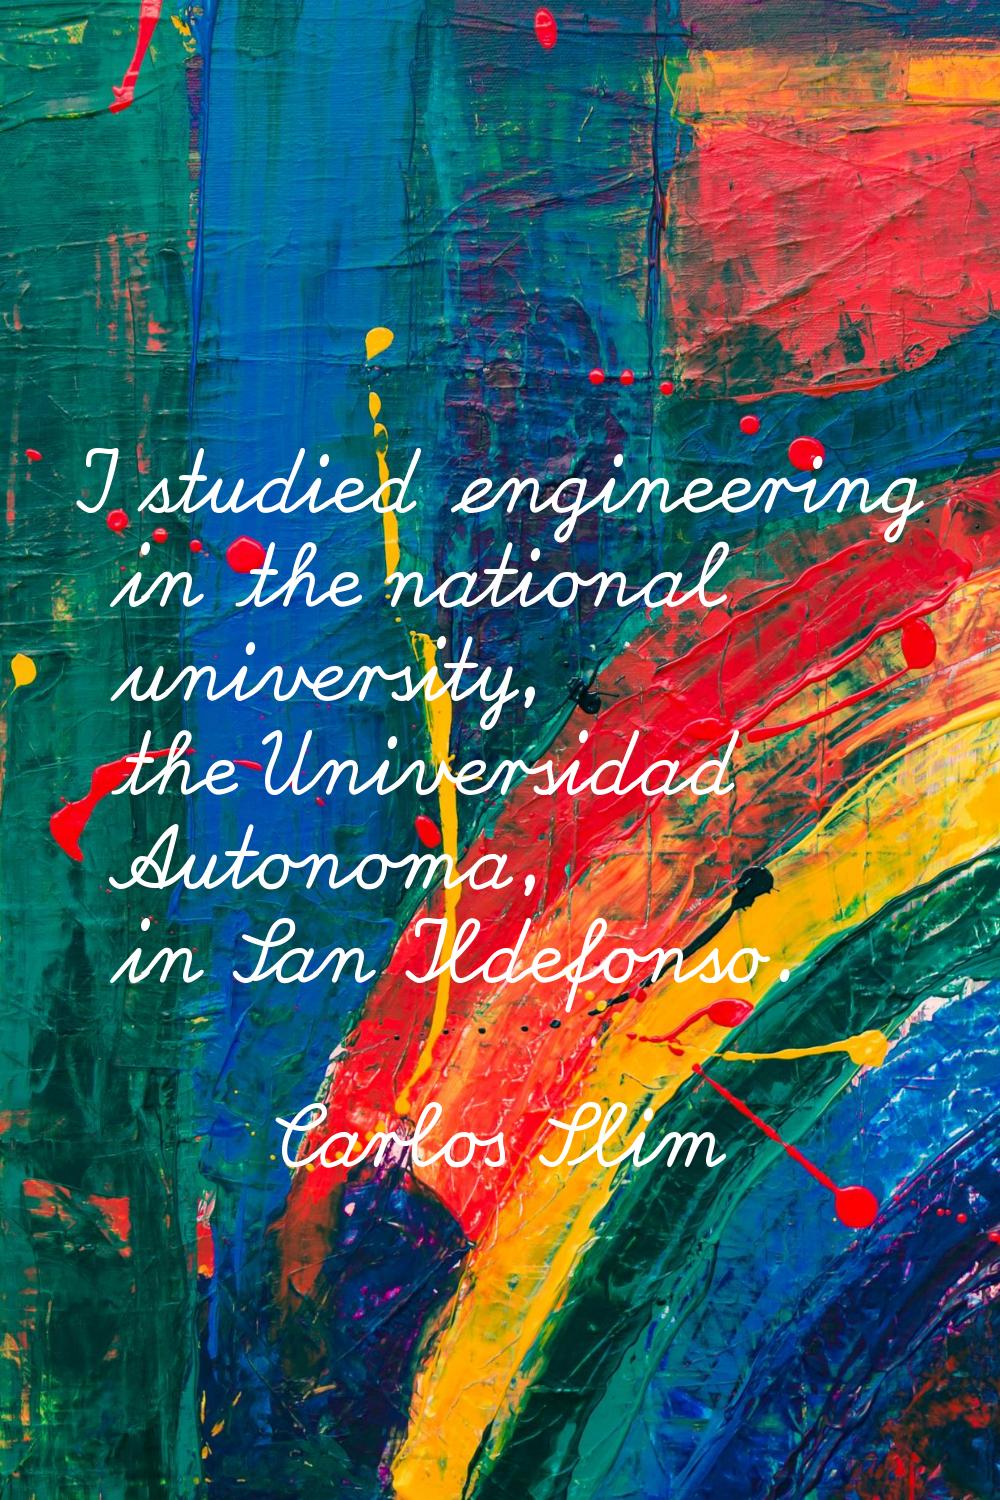 I studied engineering in the national university, the Universidad Autonoma, in San Ildefonso.